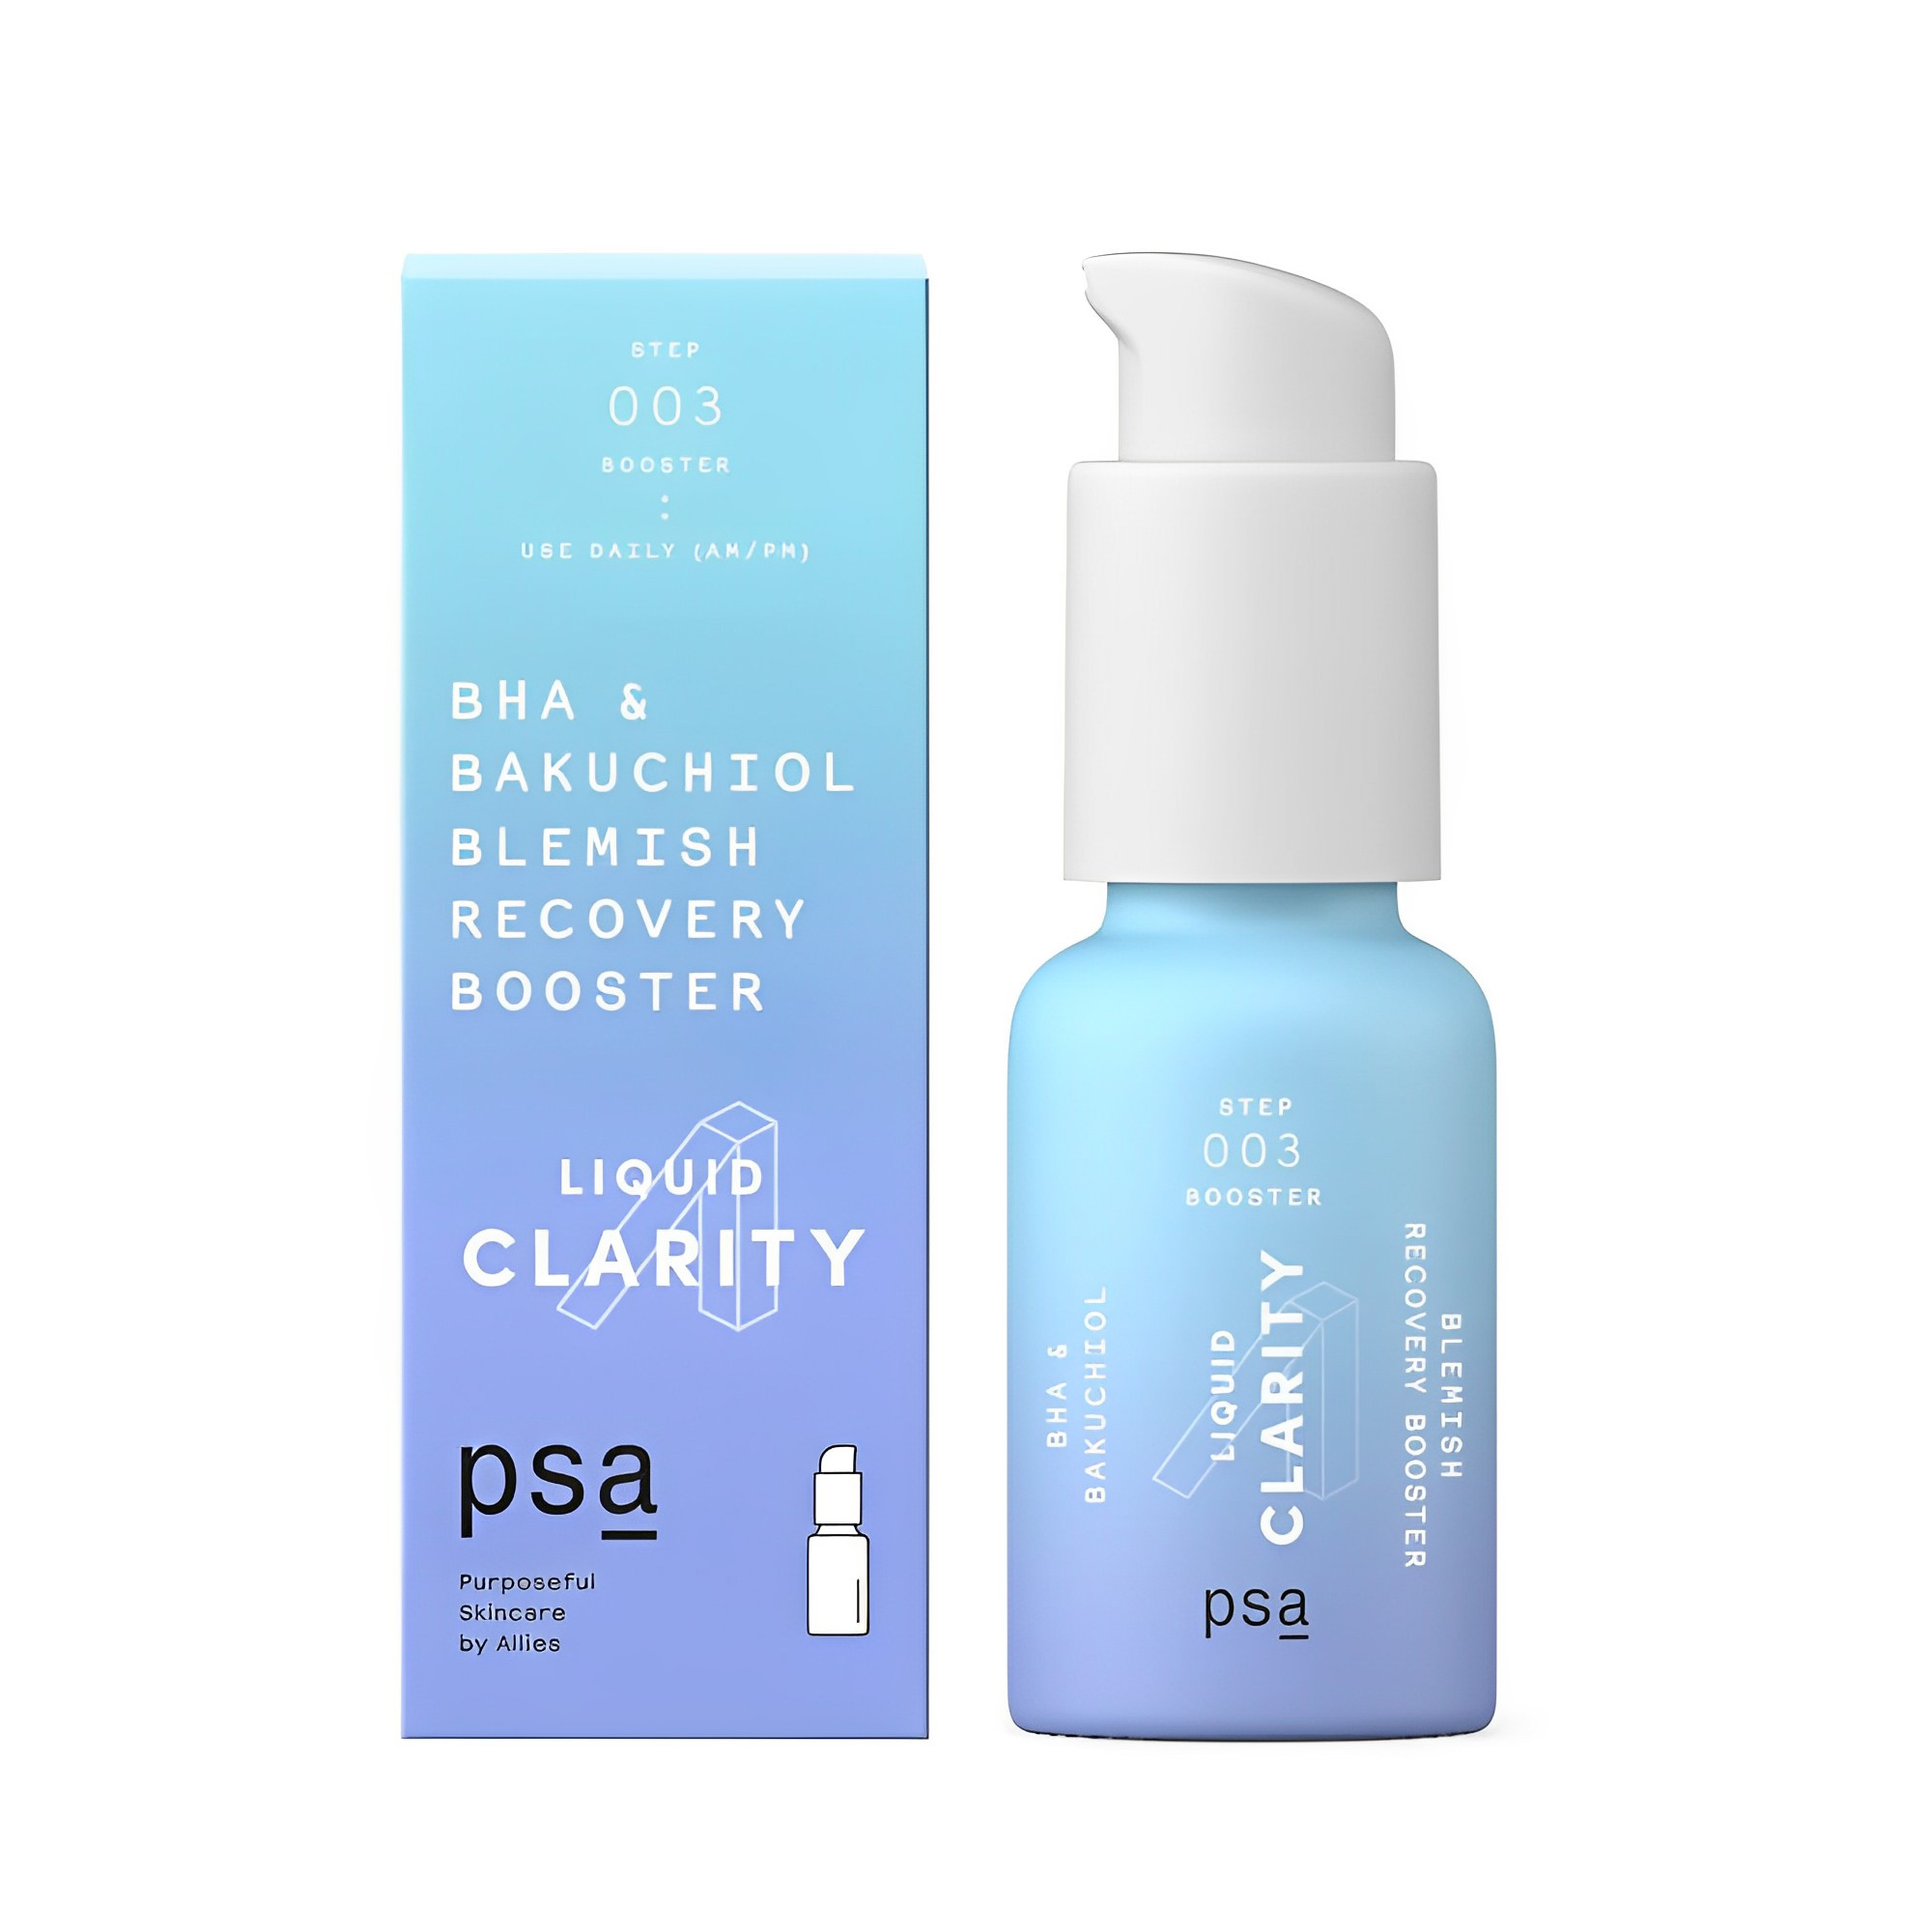 Сыворотка для проблемной кожи PSA Liquid clarity BHA & Bakuchiol Blemish Recovery Booster